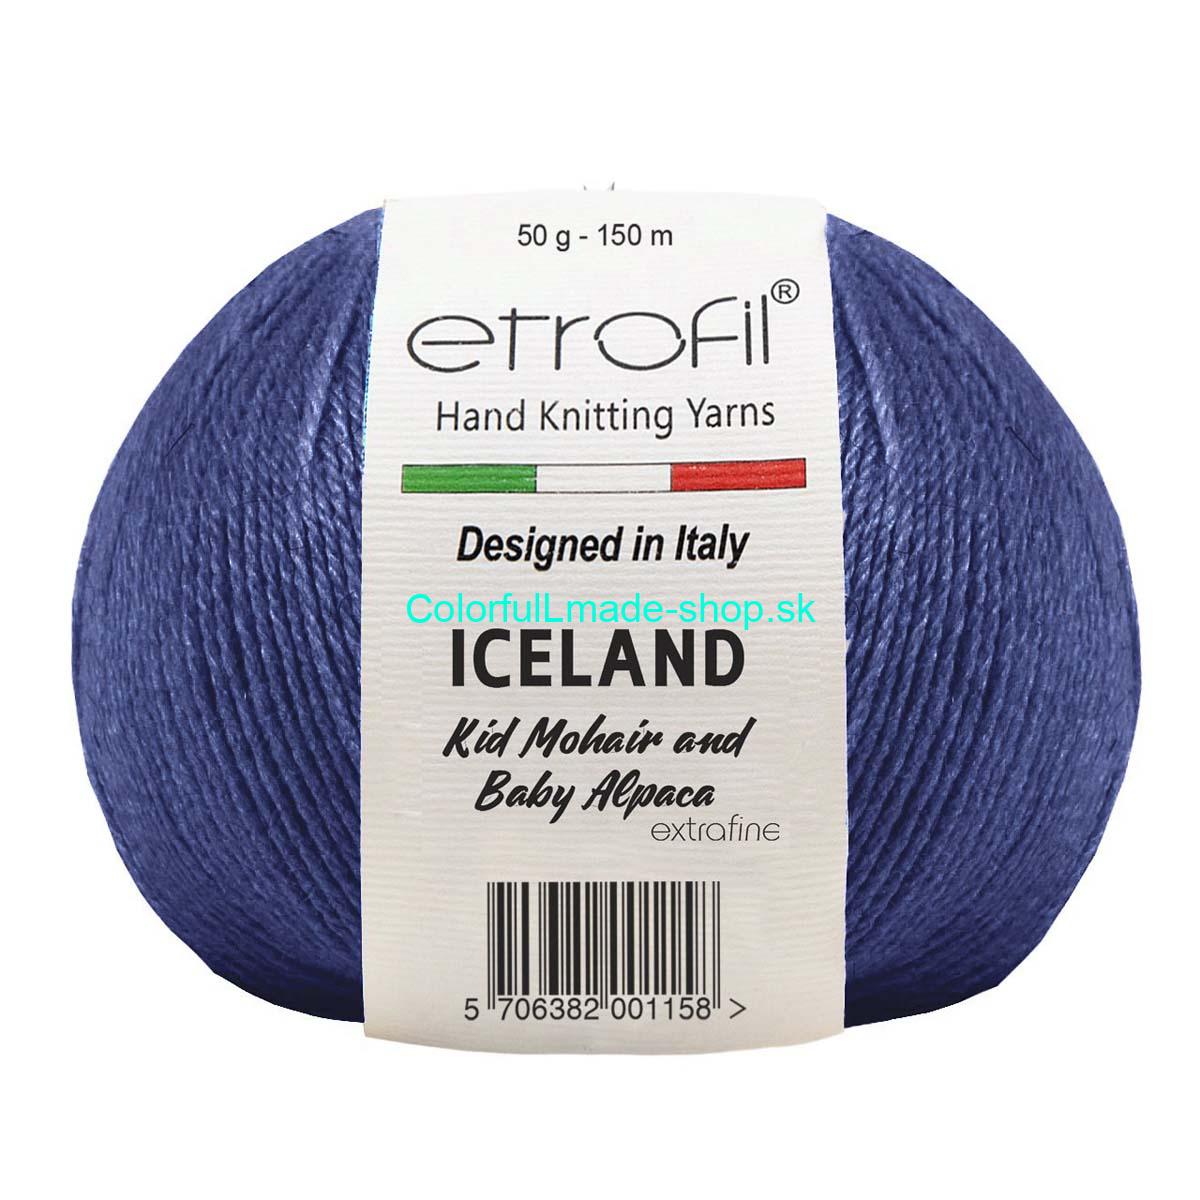 Etrofil - Iceland - Purple-Blue